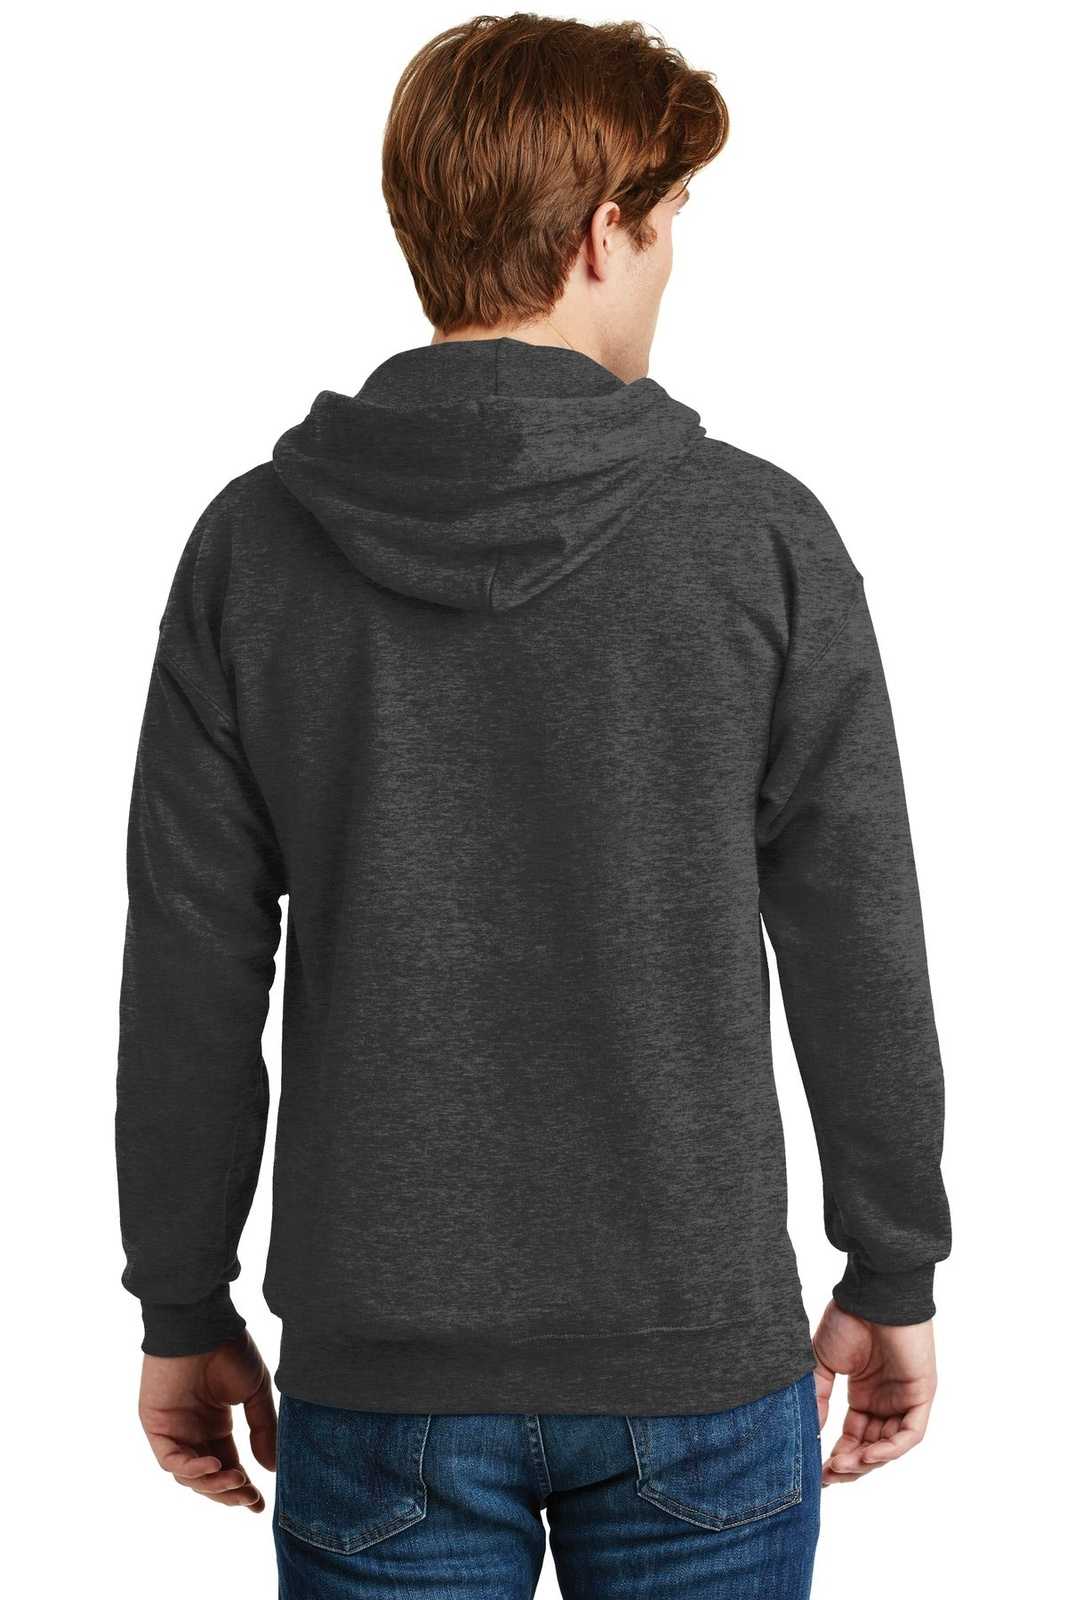 Hanes F283 Ultimate Cotton Full-Zip Hooded Sweatshirt - Charcoal Heather - HIT a Double